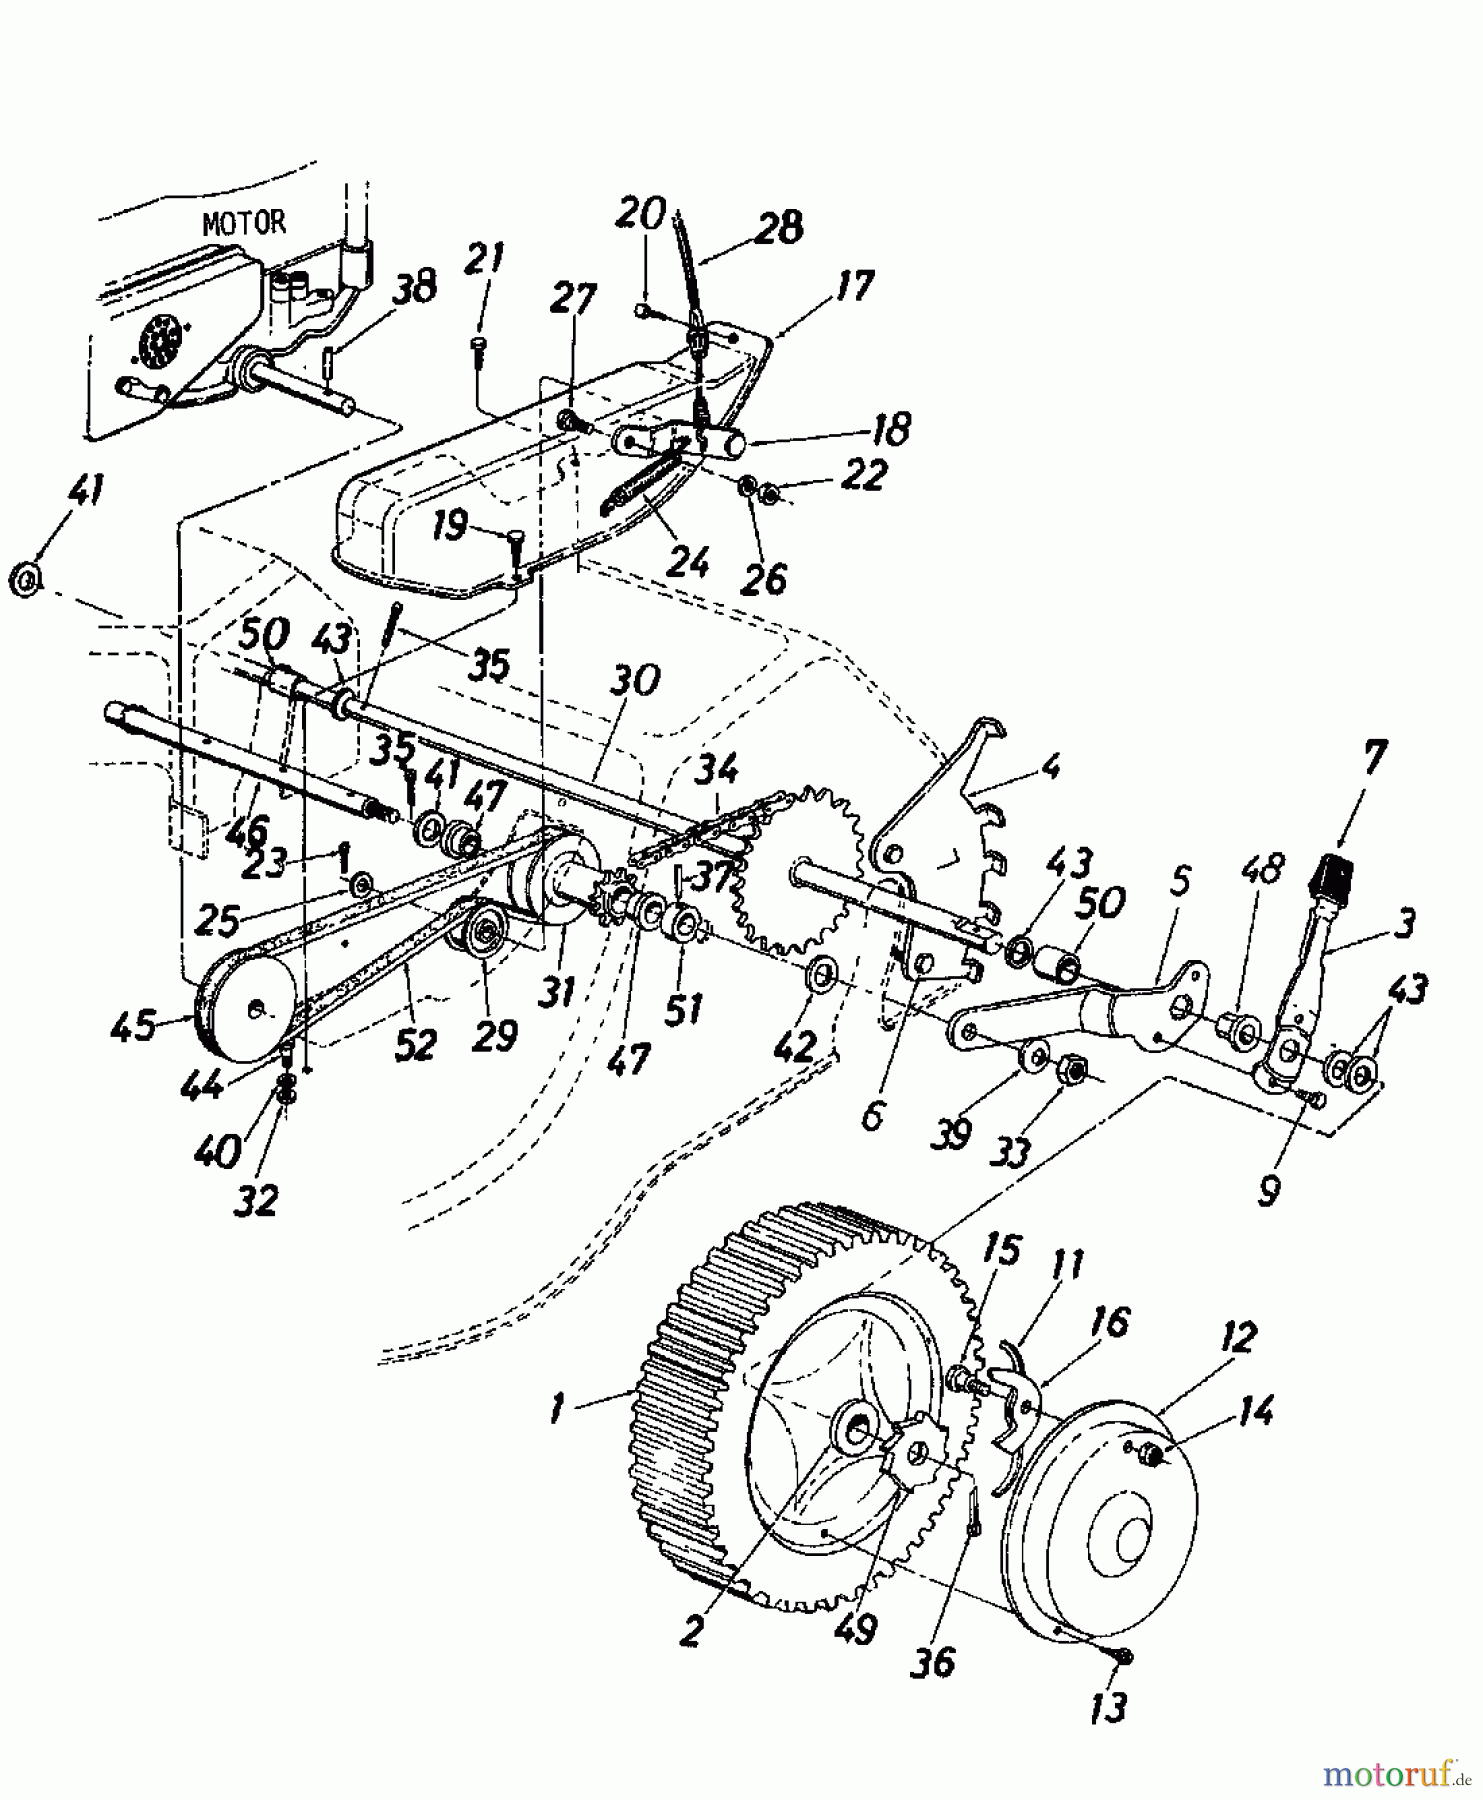  Columbia Petrol mower self propelled RD 51 SSL 127-3590  (1987) Drive system, Wheels